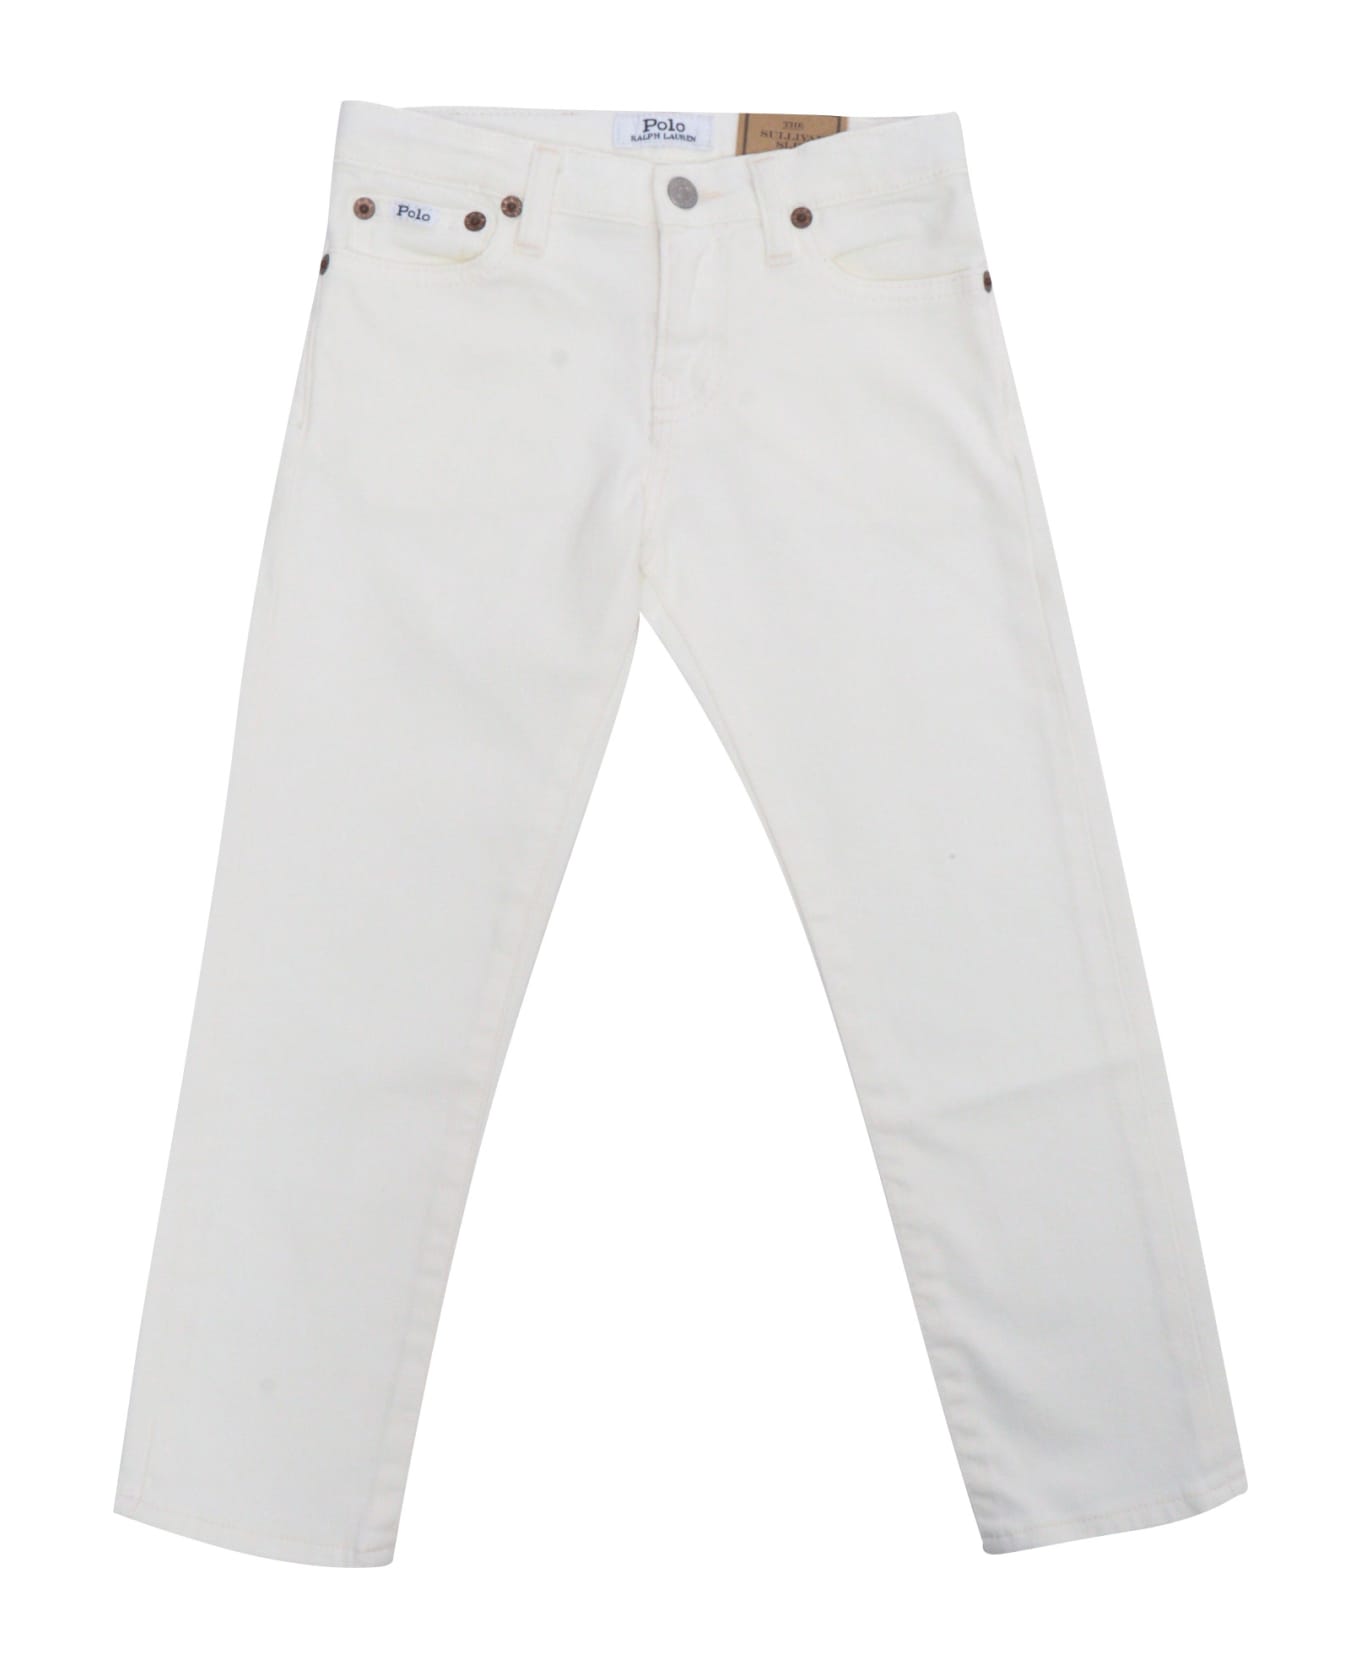 Polo Ralph Lauren White Jeans - WHITE